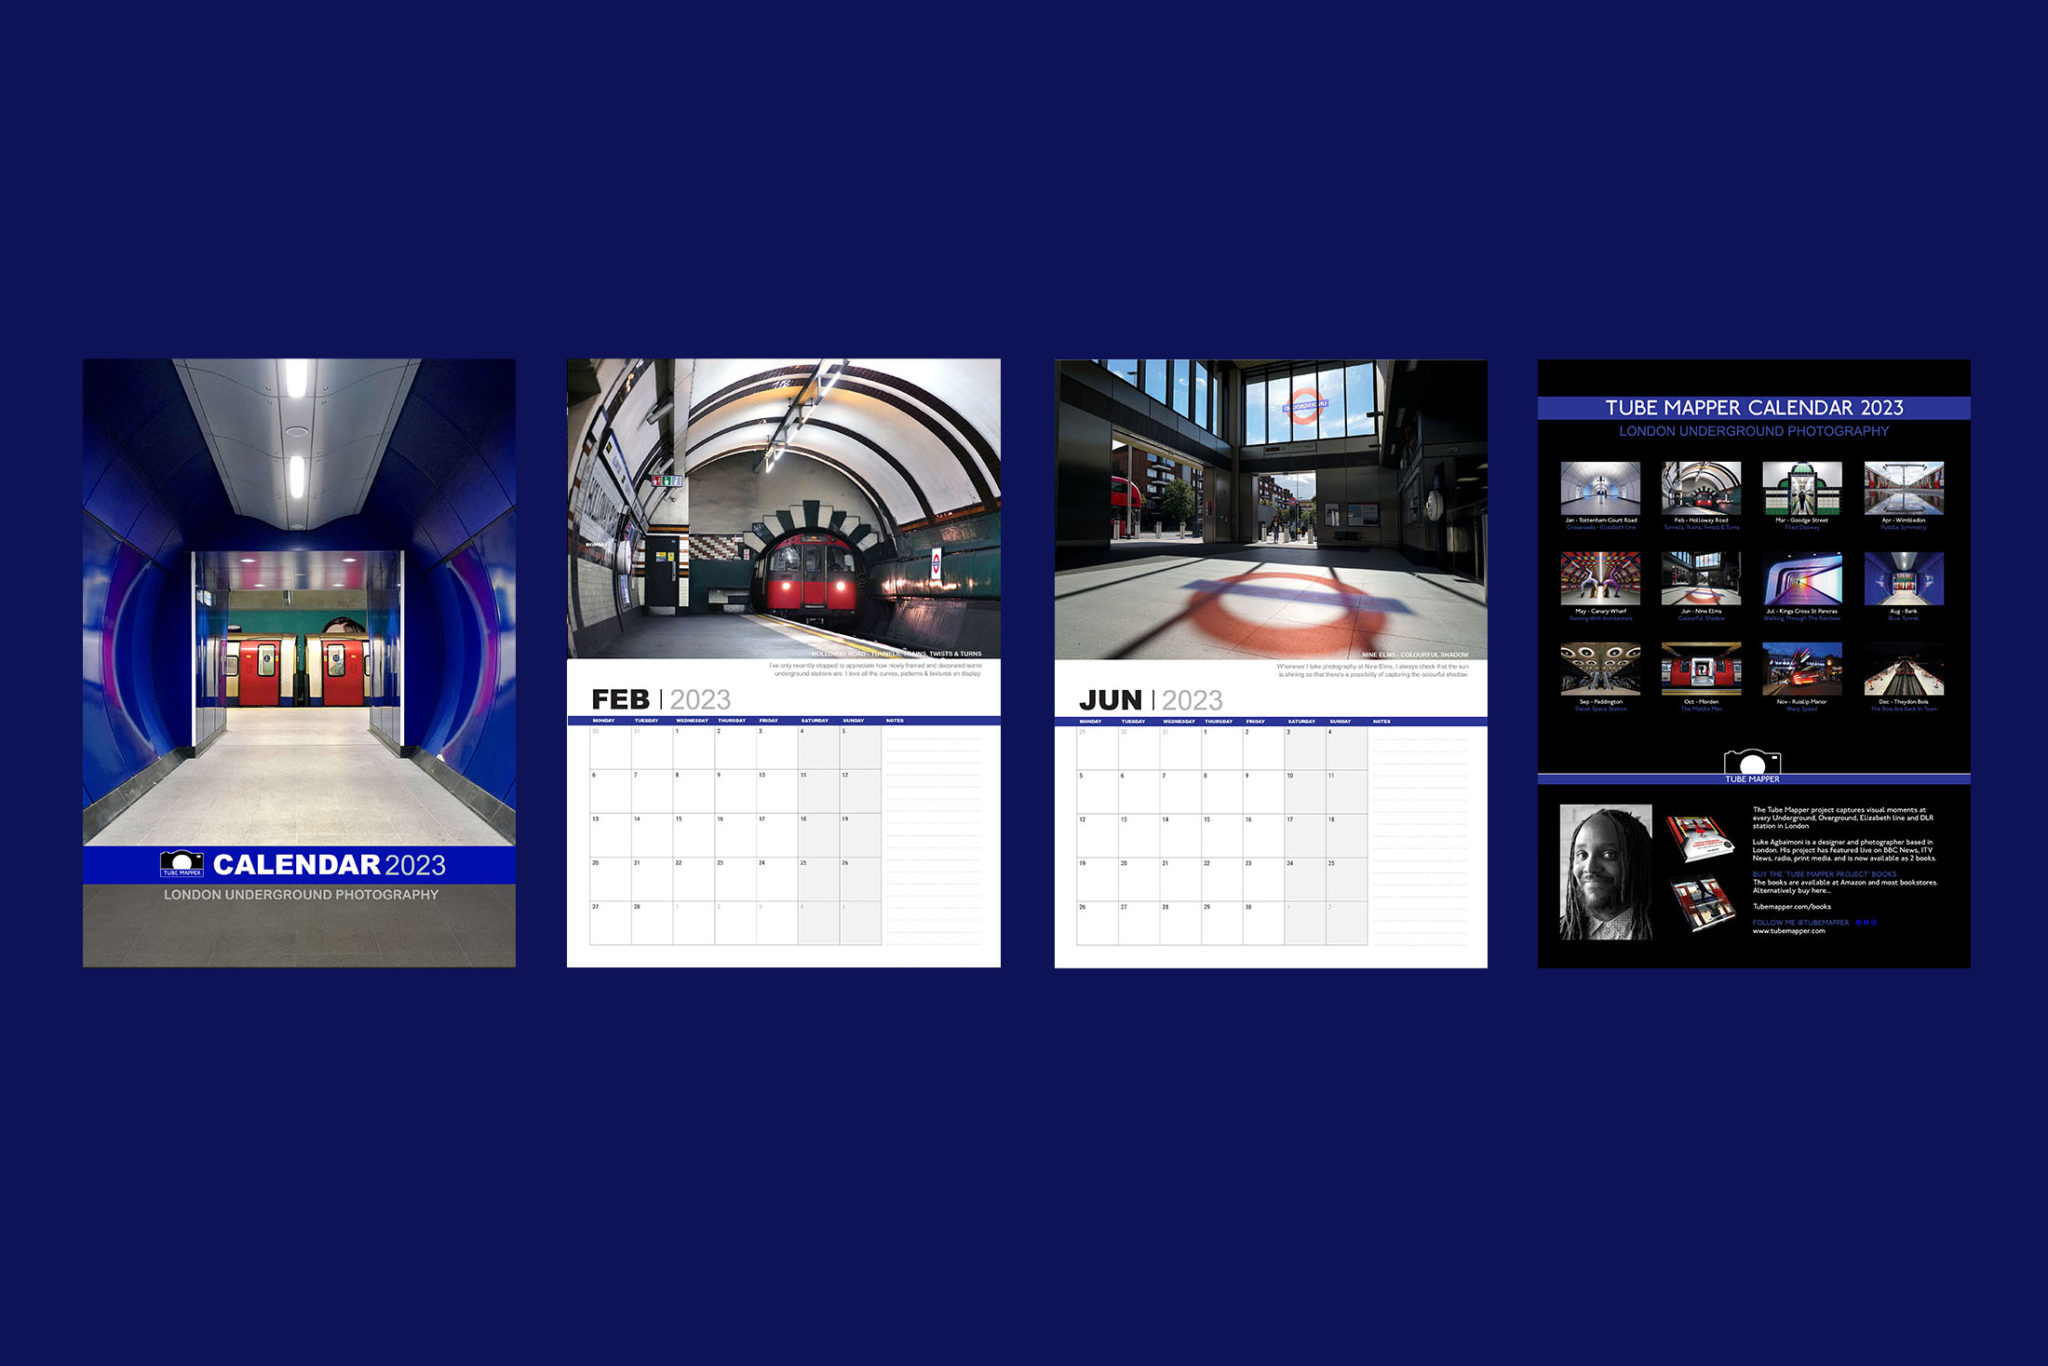 Buy London Underground 2023 Calendar Tube Mapper